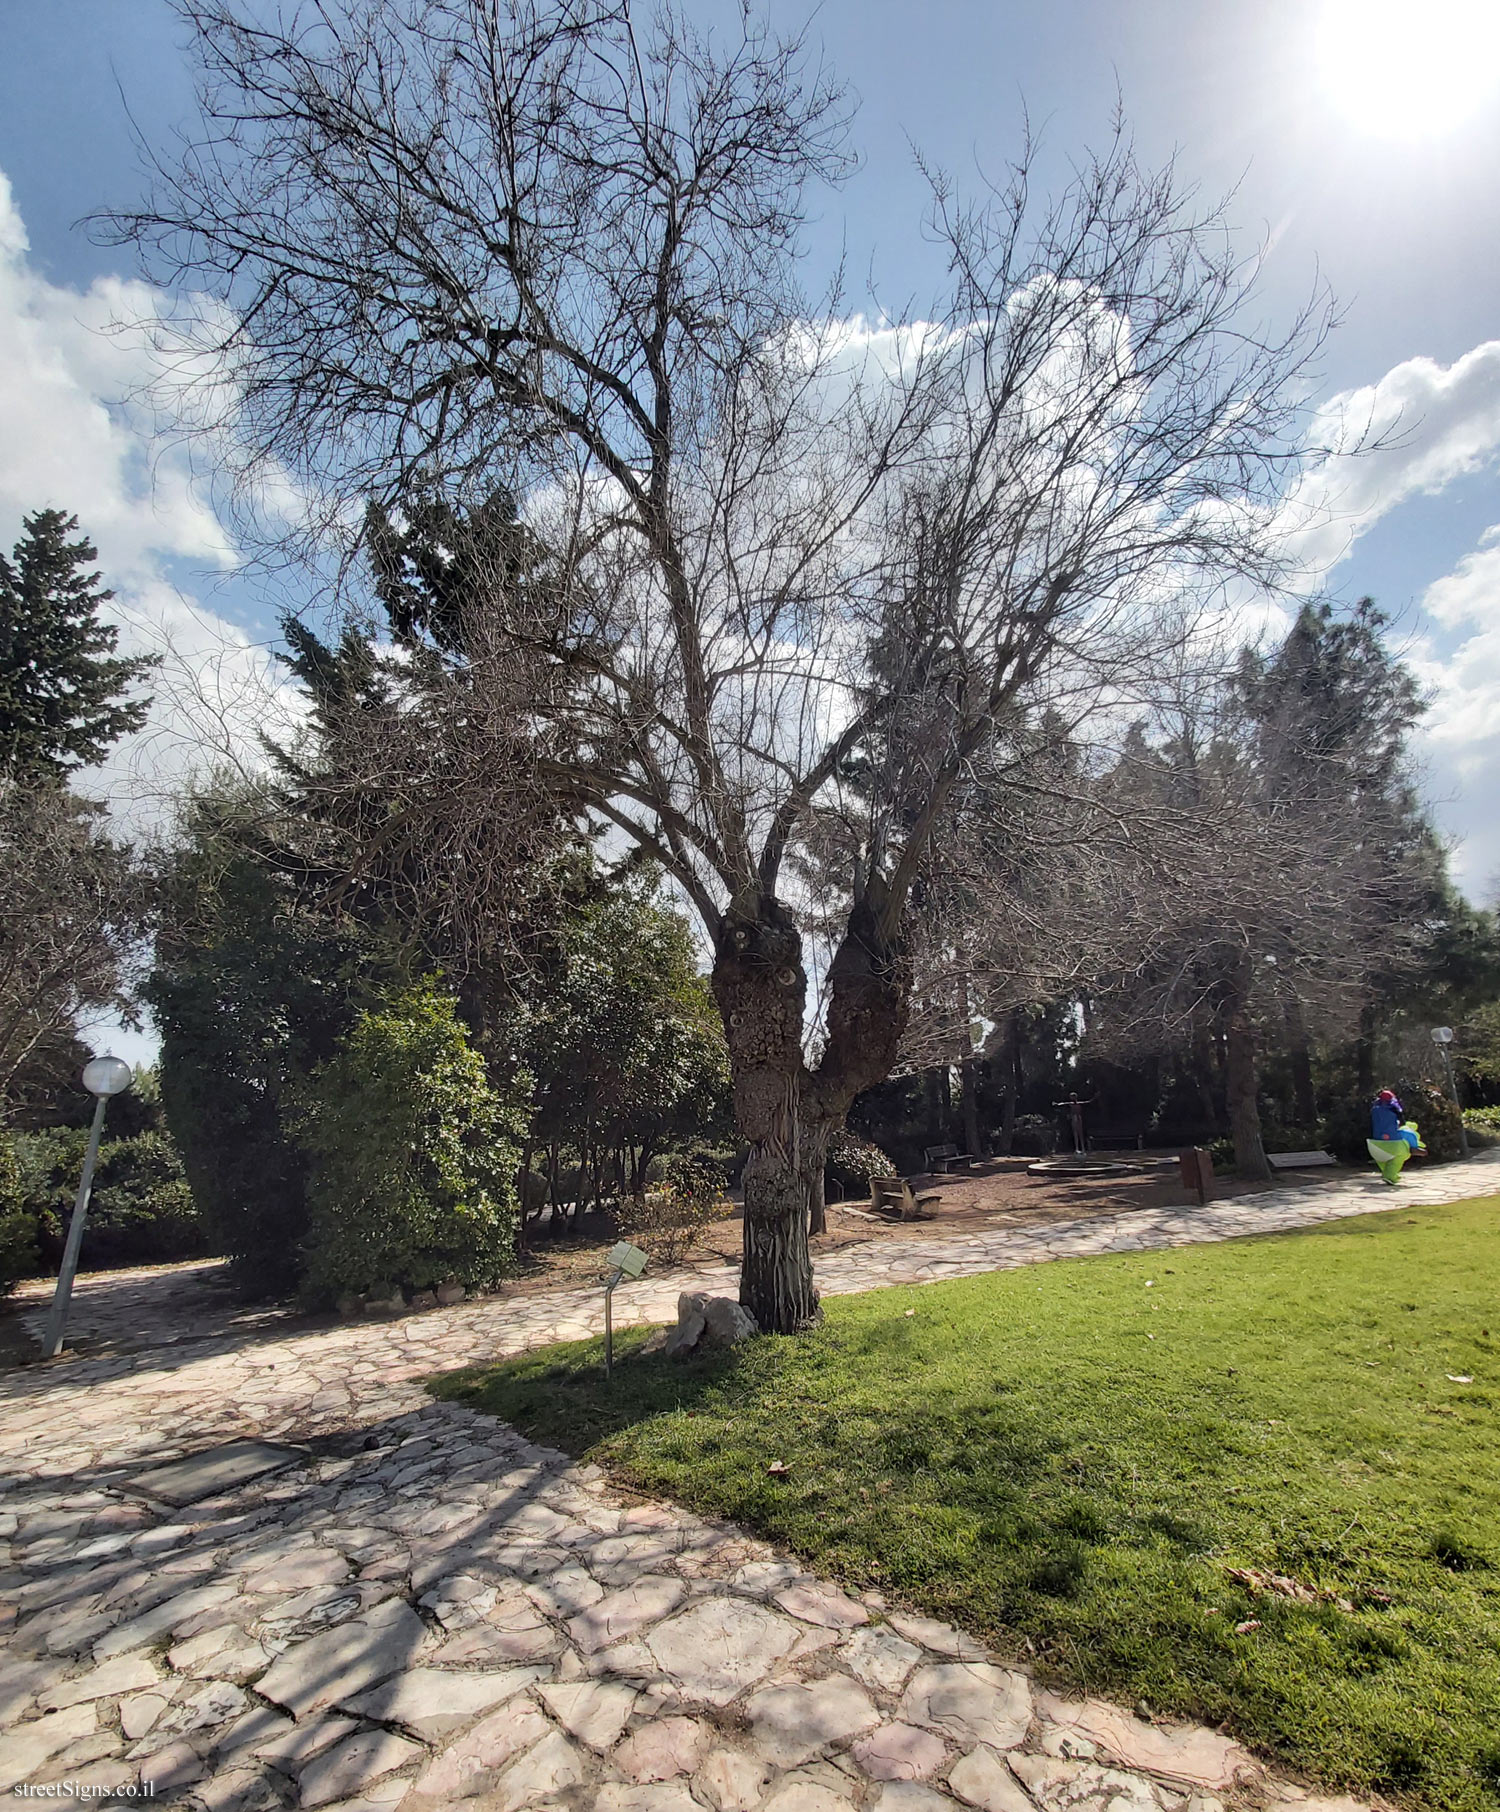 The Hebrew University of Jerusalem - Discovery Tree Walk - Siberian Elm - Safra Campus